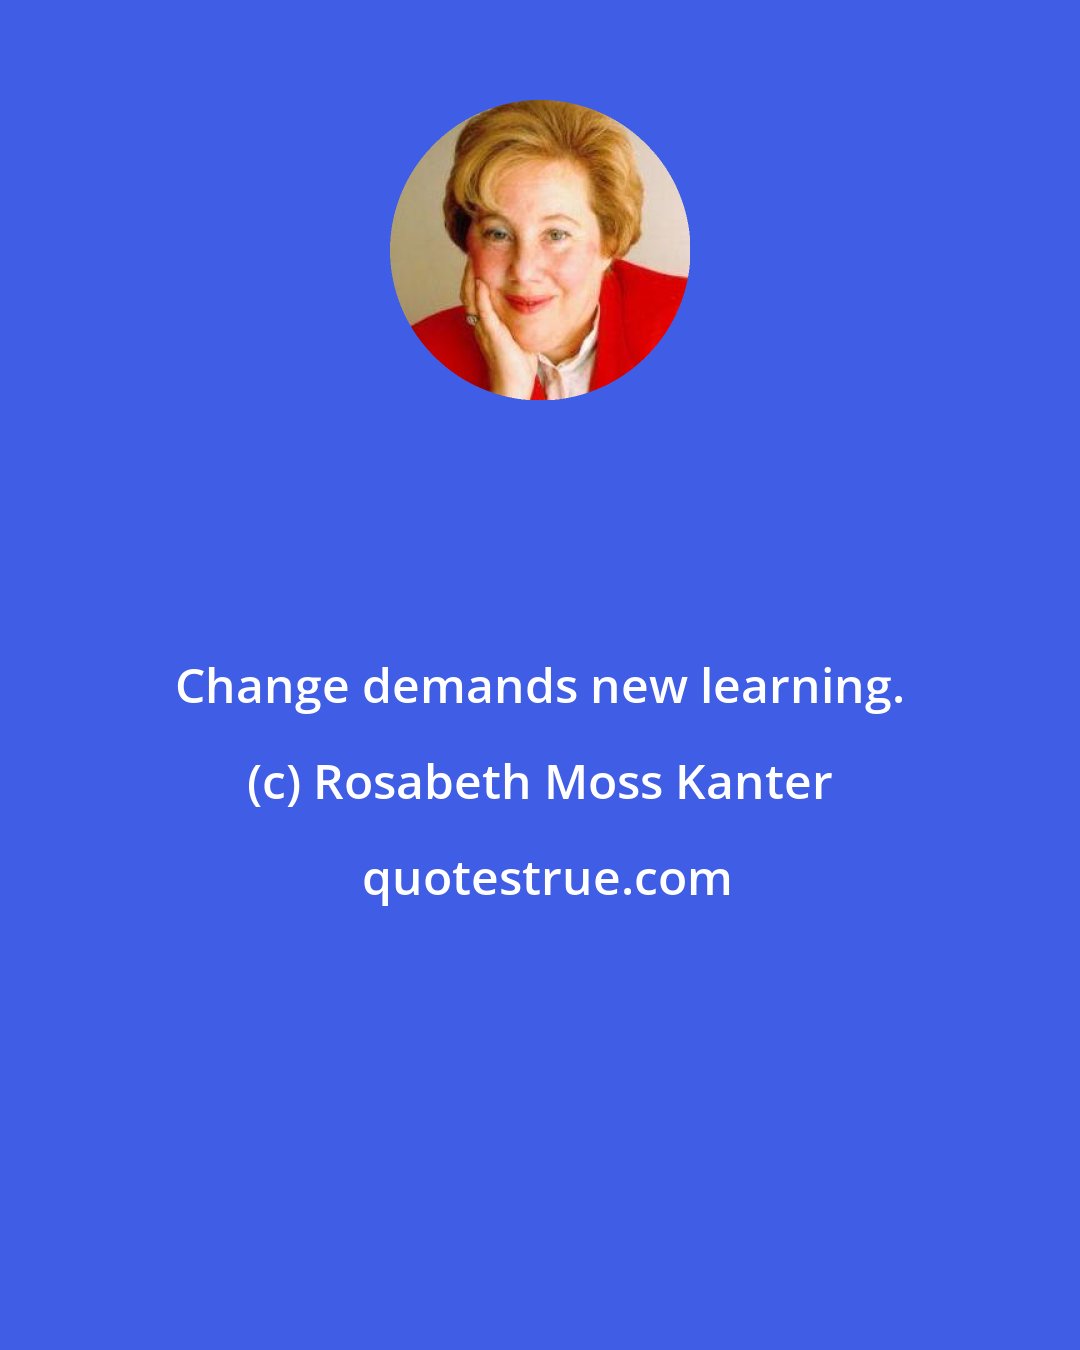 Rosabeth Moss Kanter: Change demands new learning.